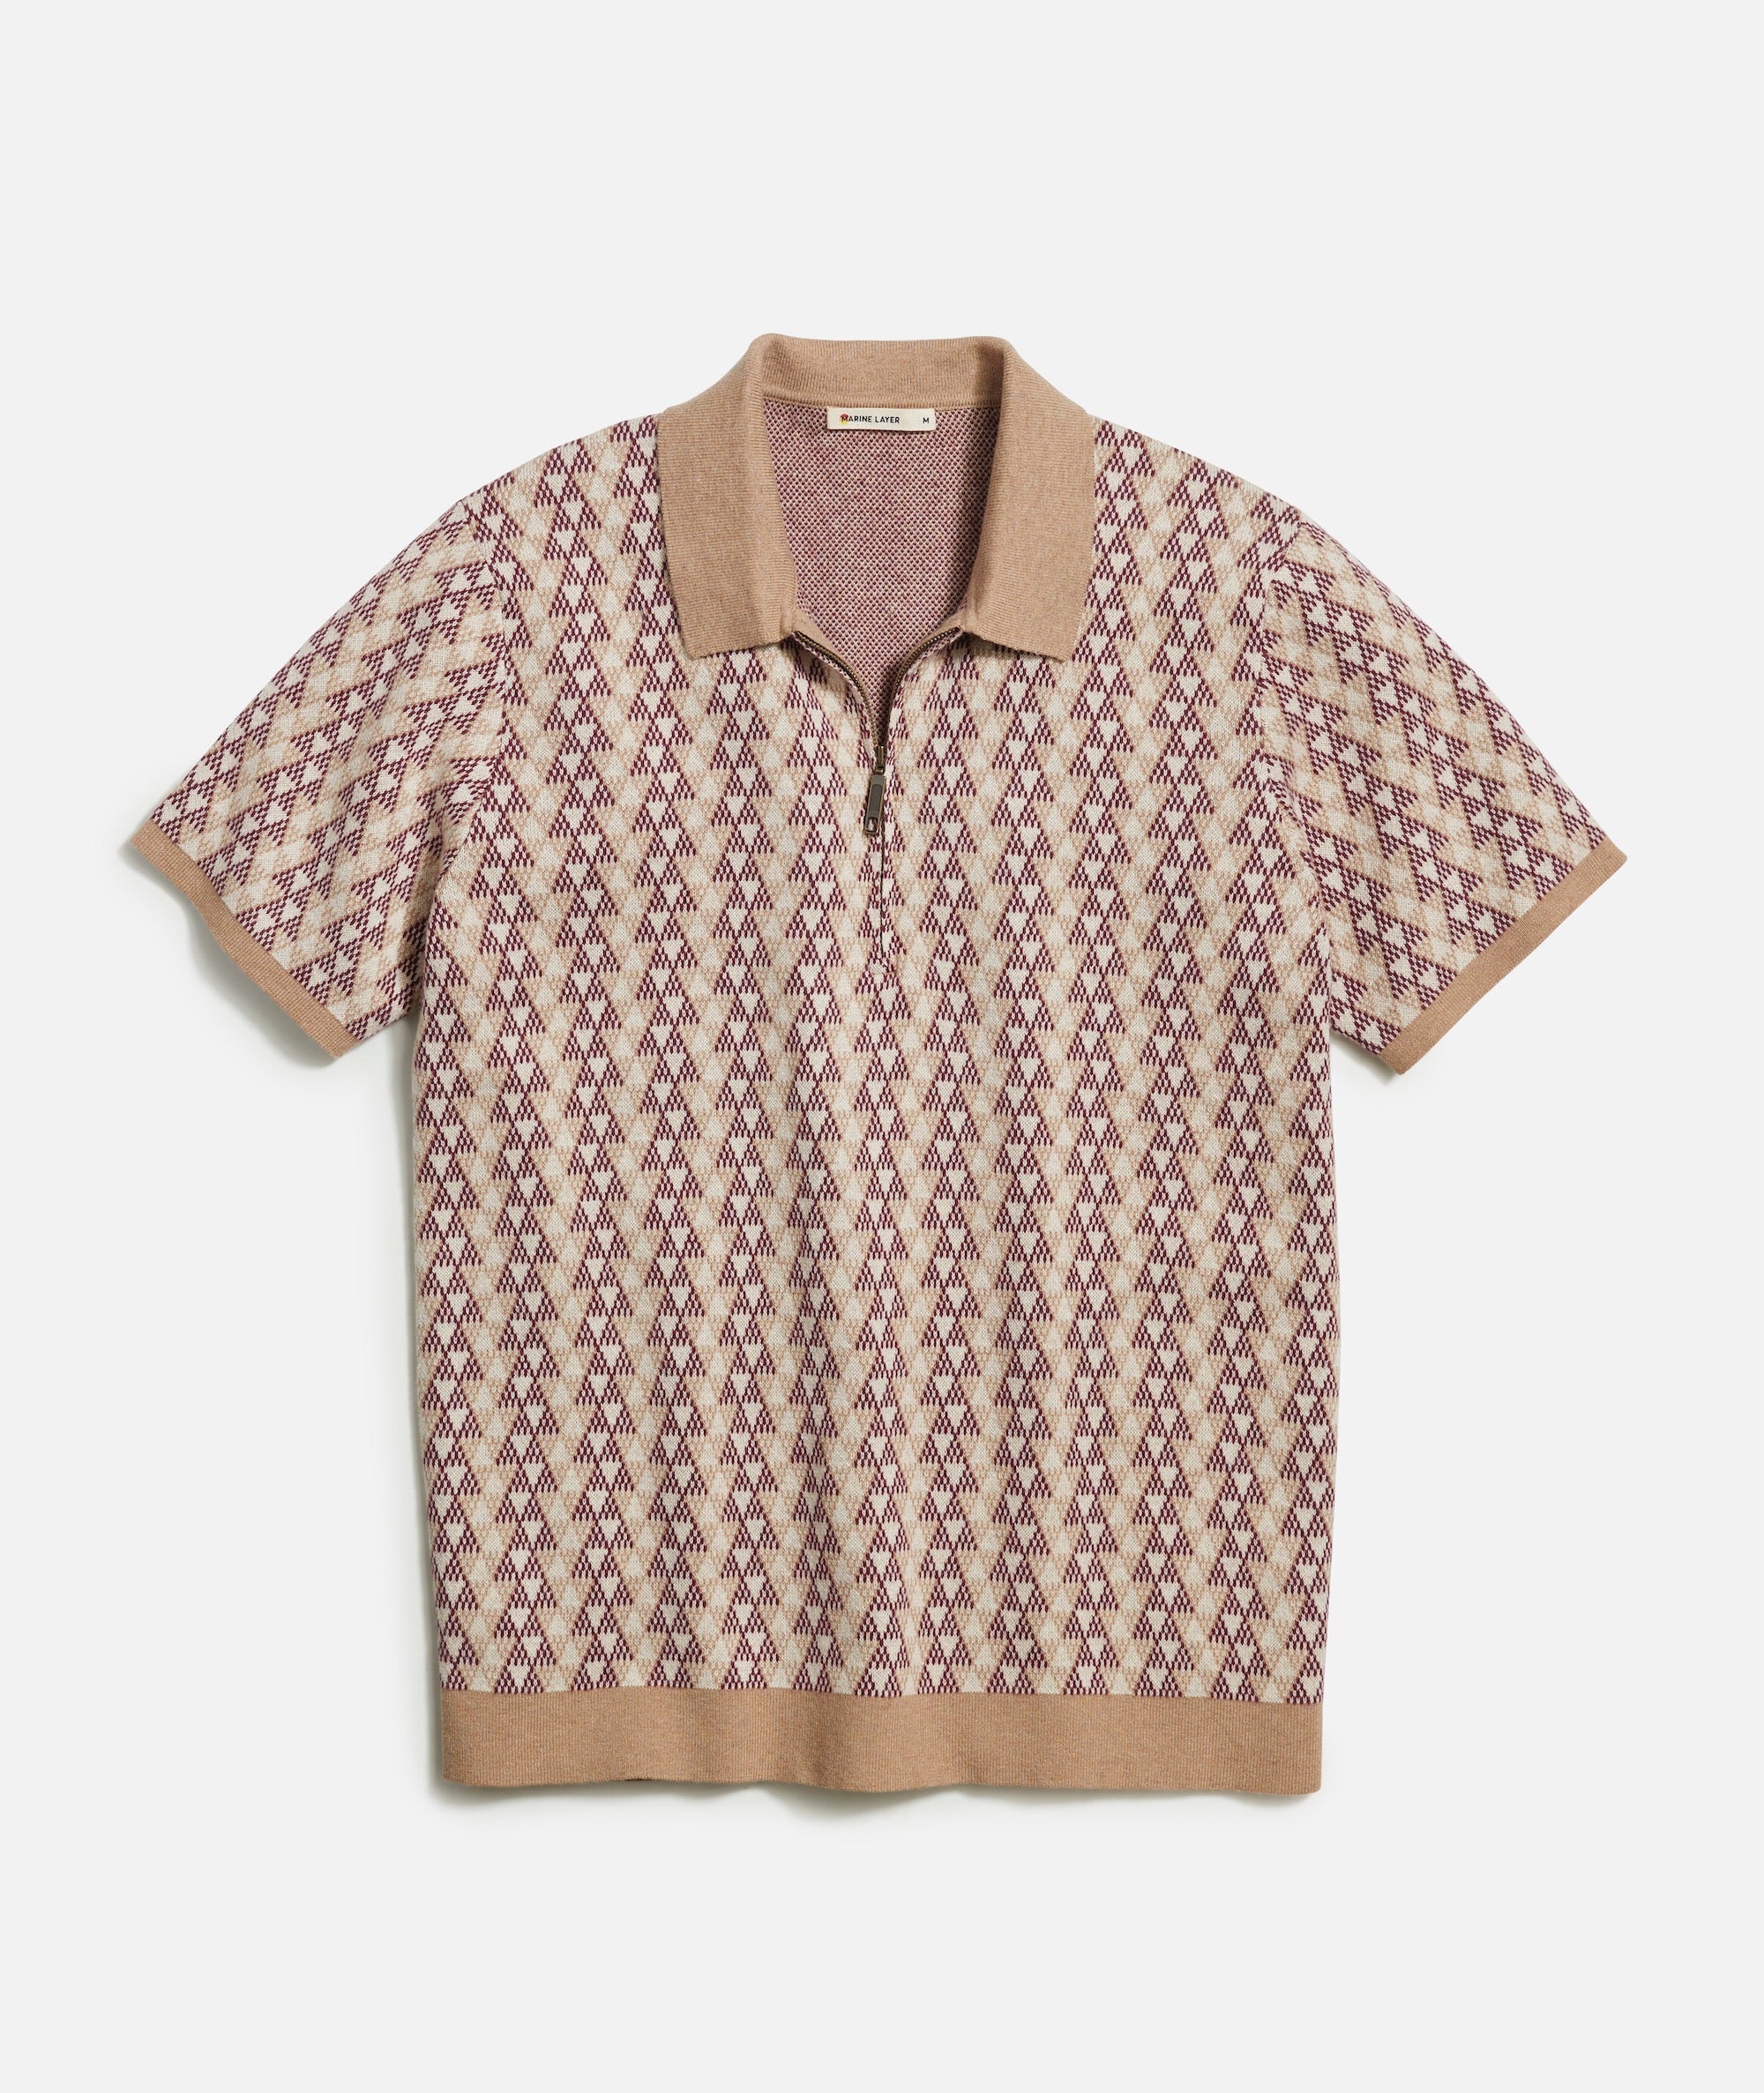 Louis Vuitton Monogram Knit Polo Shirt